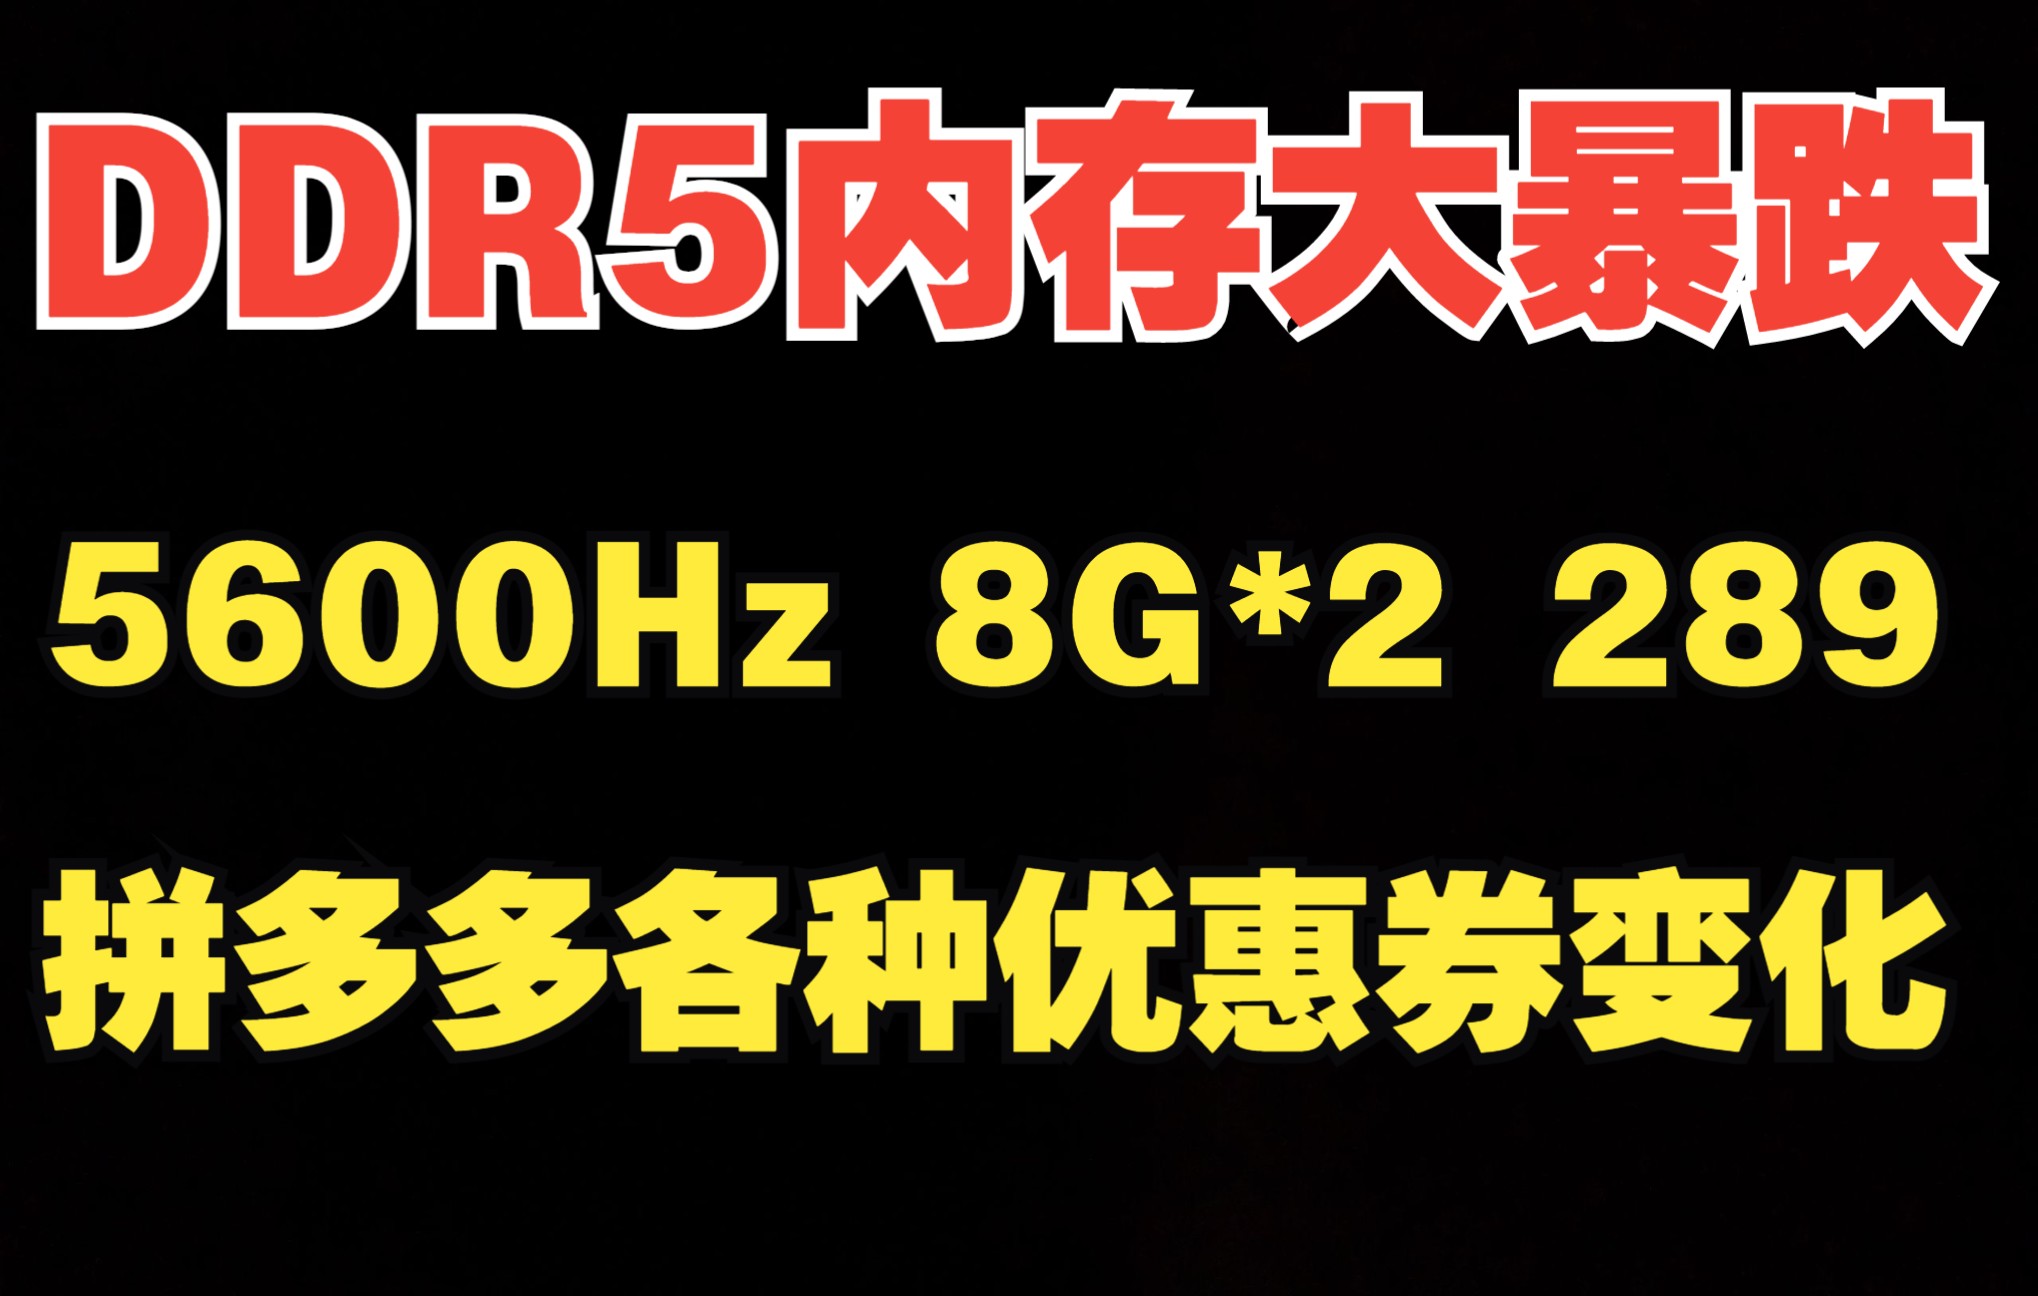 DDR5内存大暴跌，5600频率8G*2到手289，拼多多各种优惠券变化！